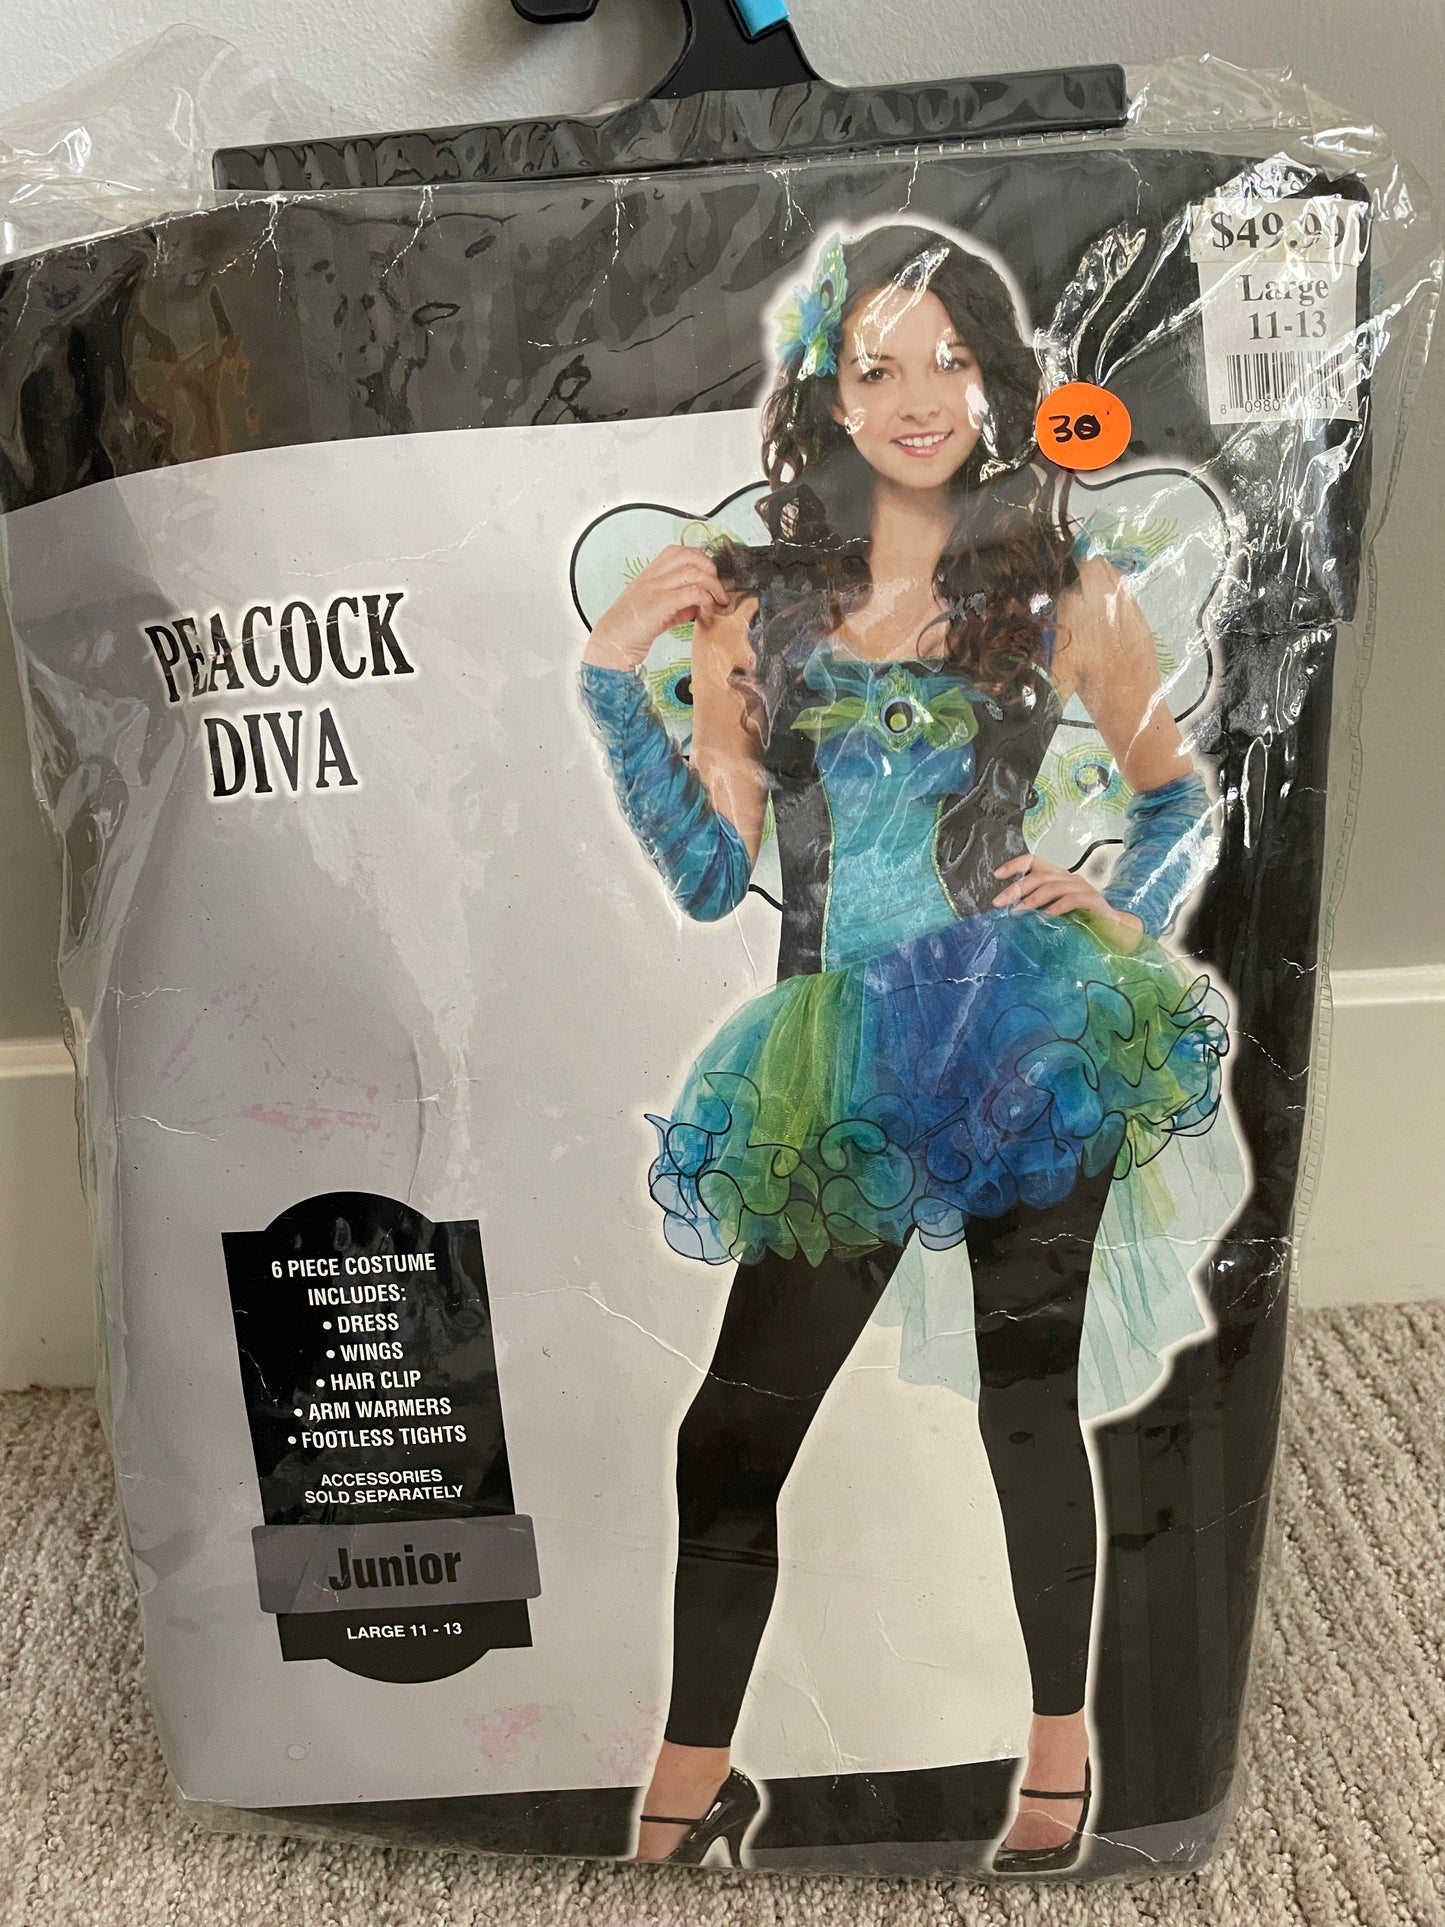 Peacock Diva costume